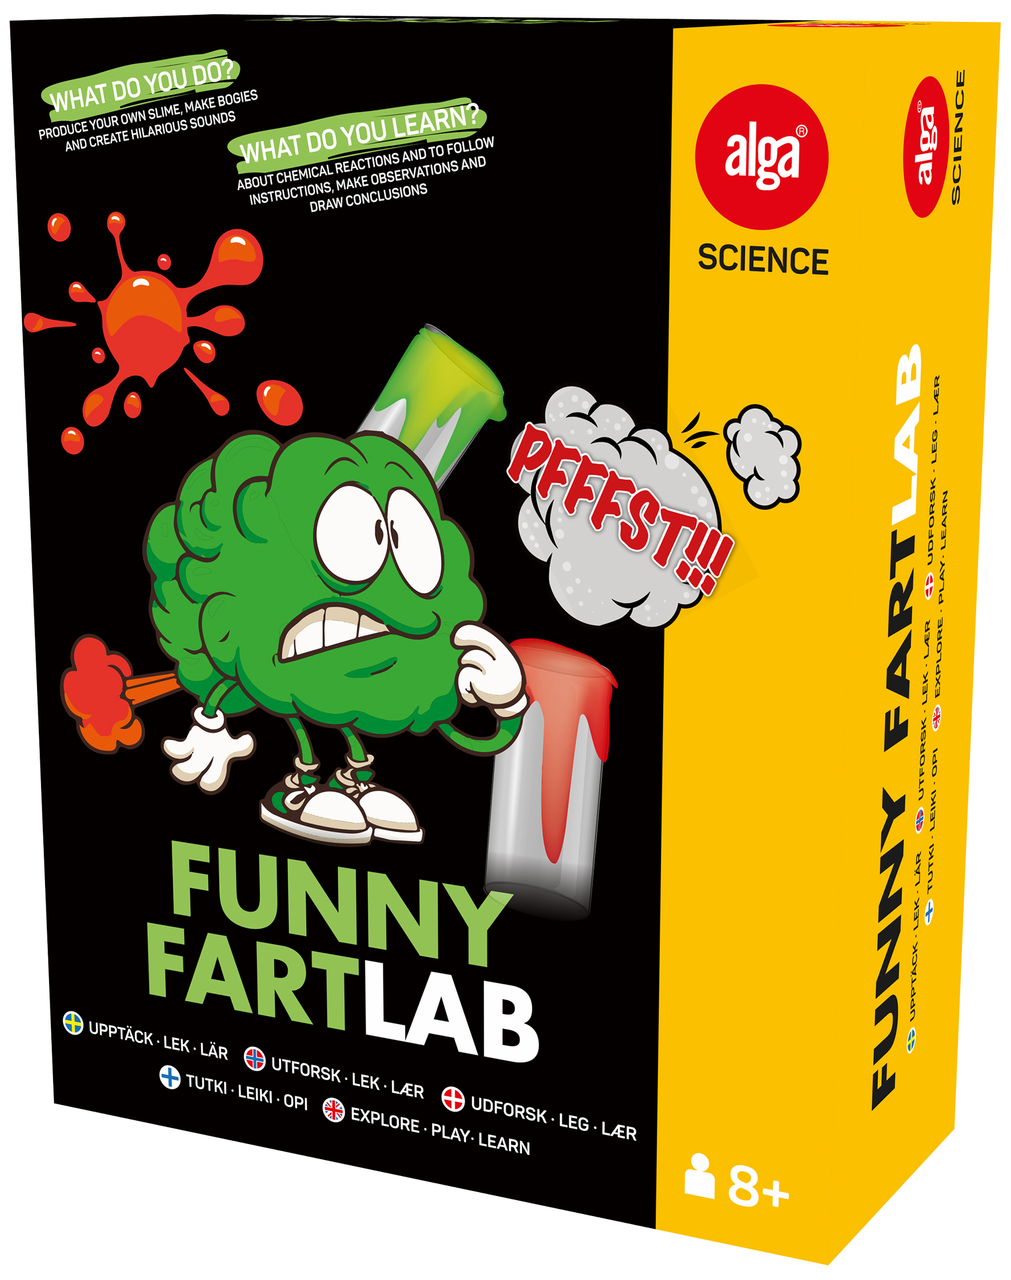 Funny Fart Lab -Pierulimantekosetti | Alga